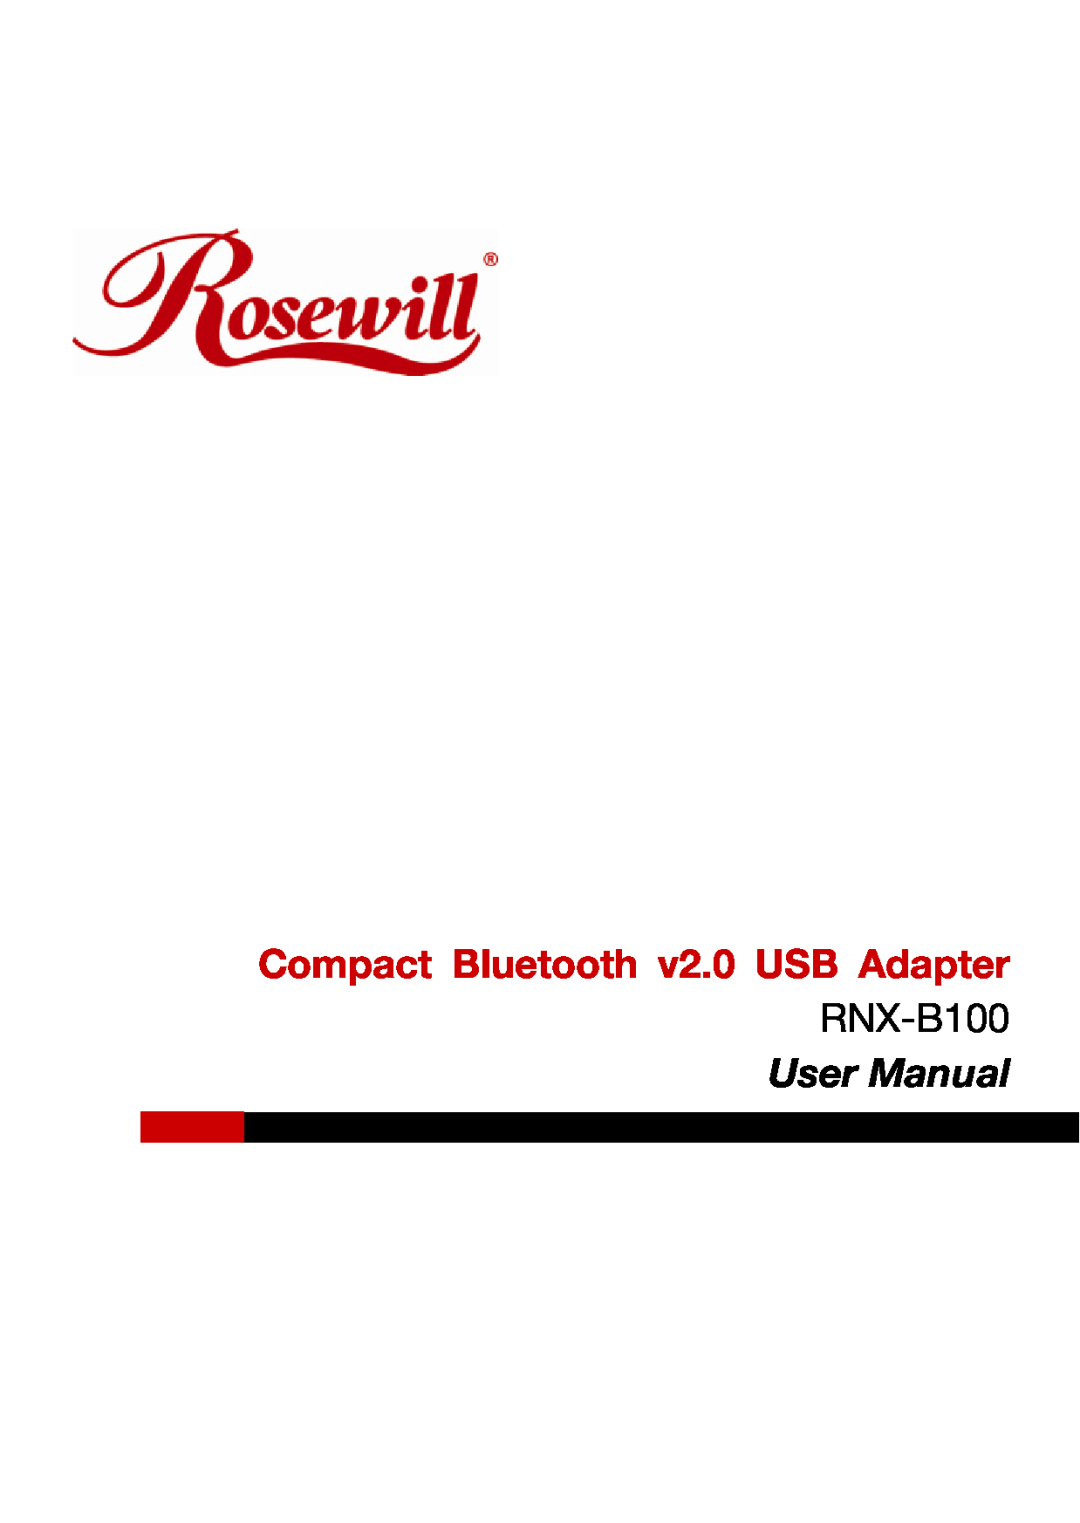 Rosewill RNX-B100 user manual Compact Bluetooth v2.0 USB Adapter, User Manual 